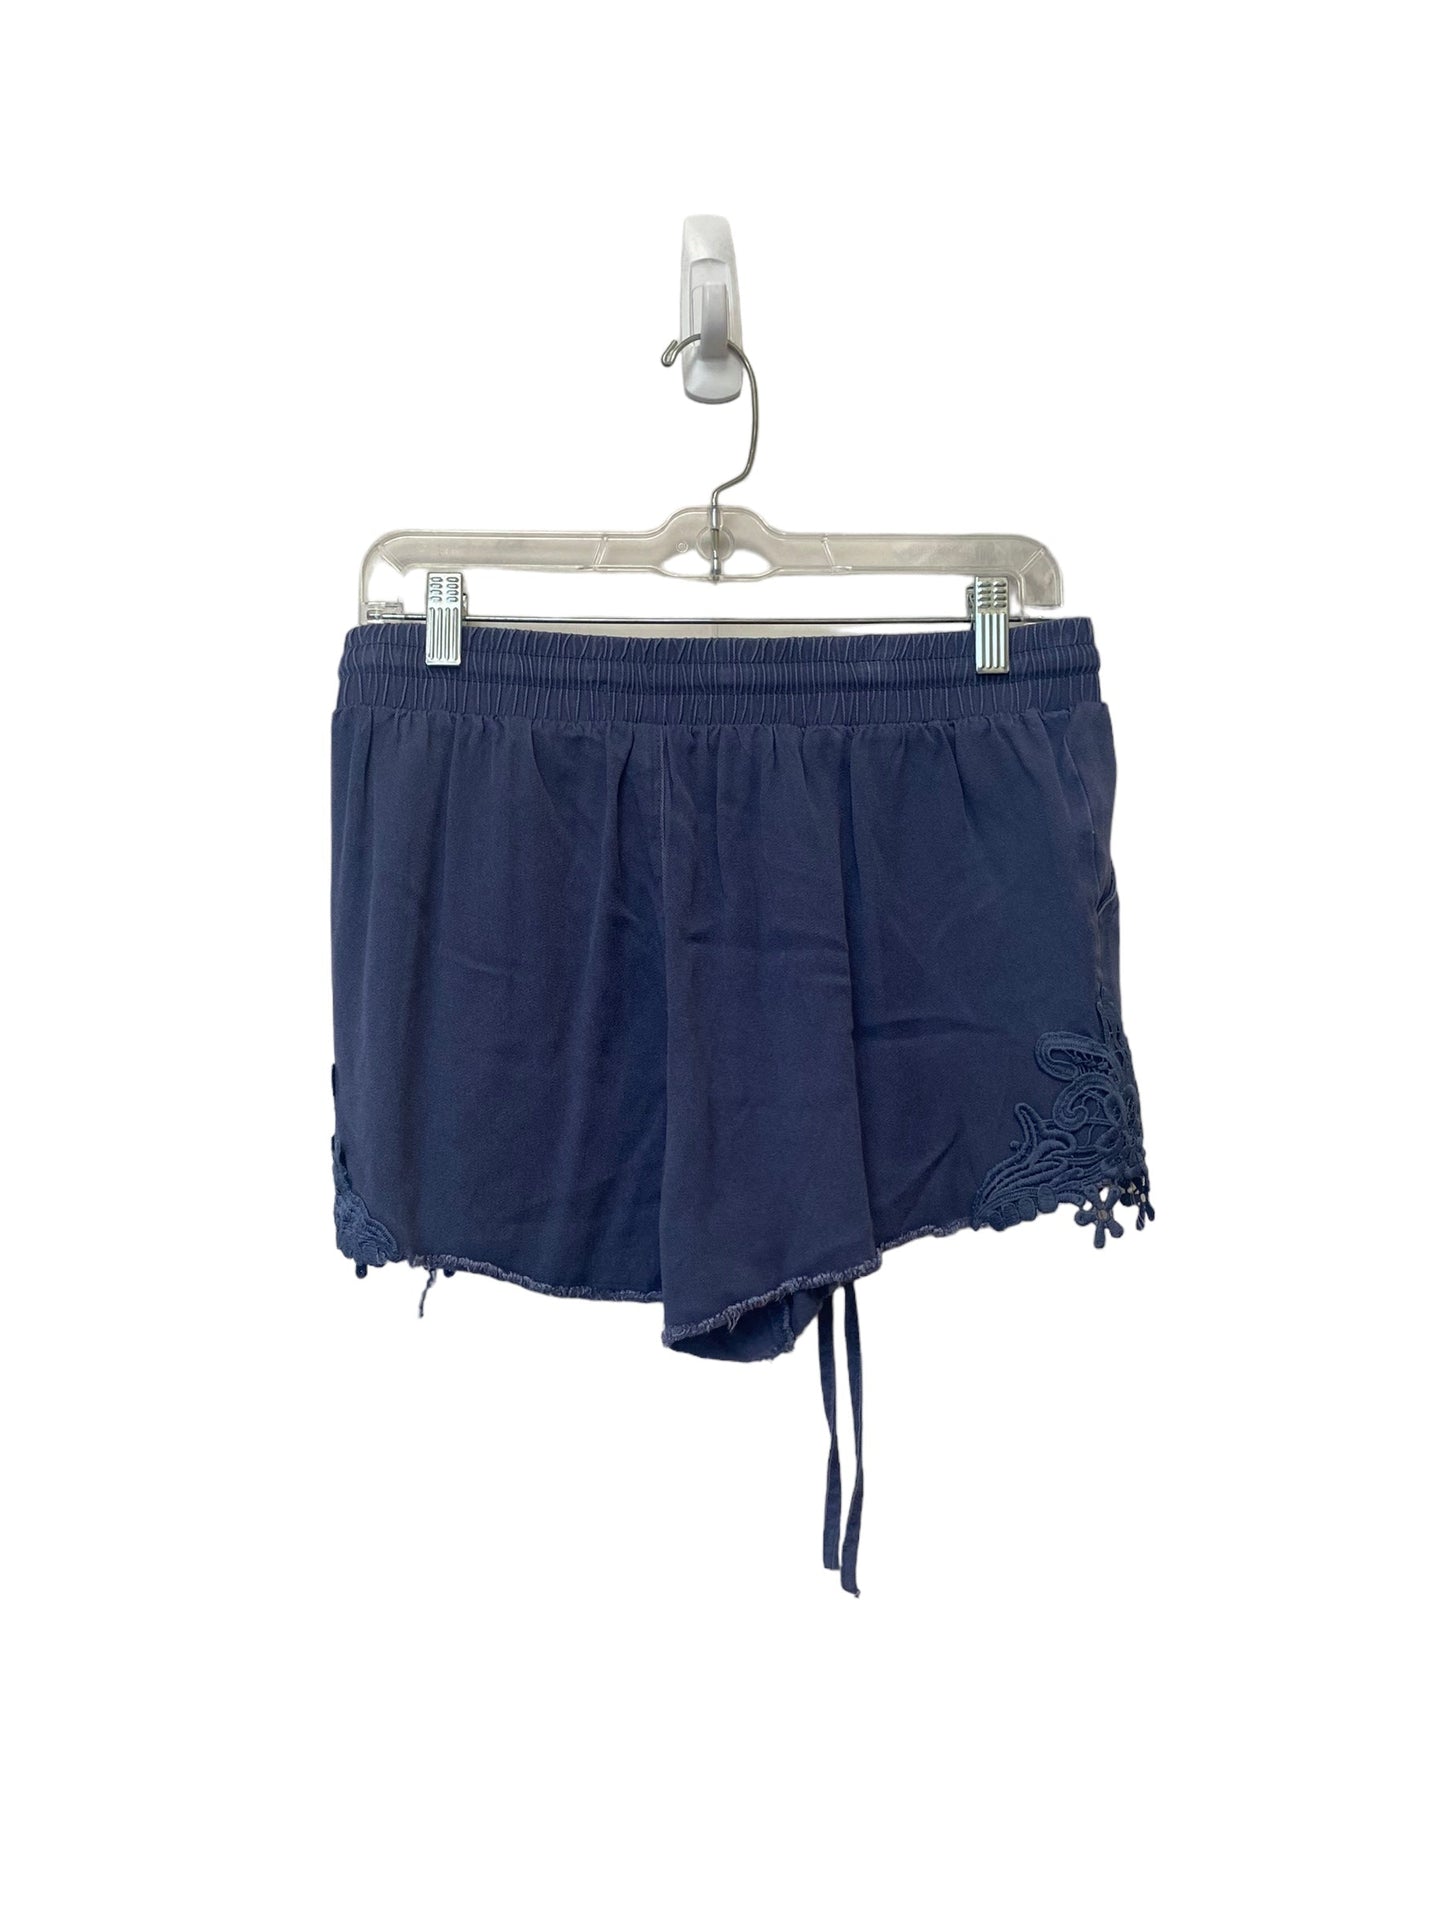 Blue Shorts Knox Rose, Size S